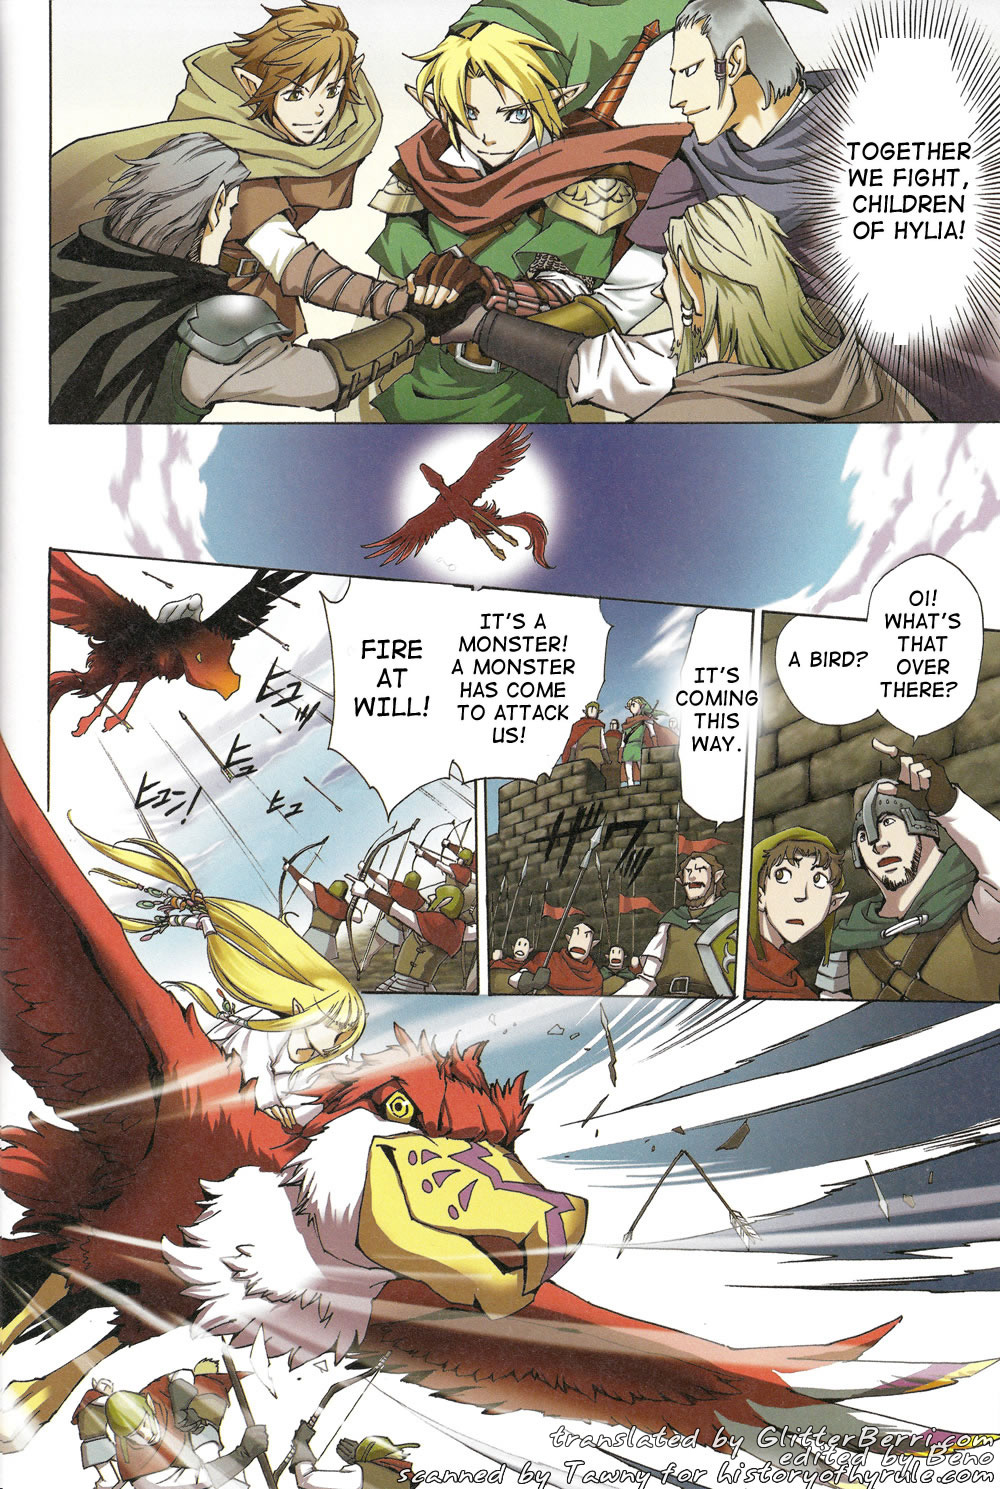 Skyward sword manga